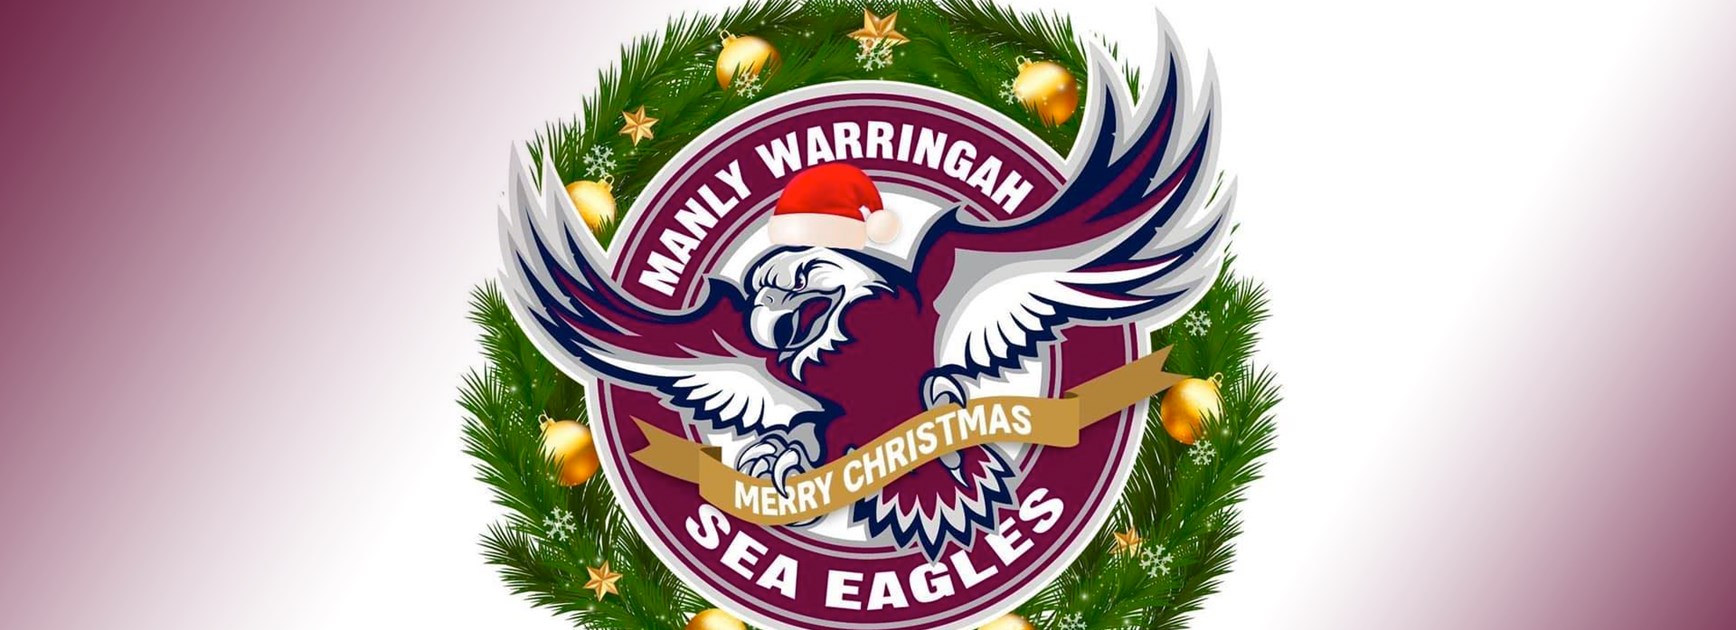 Christmas Shutdown for Sea Eagles